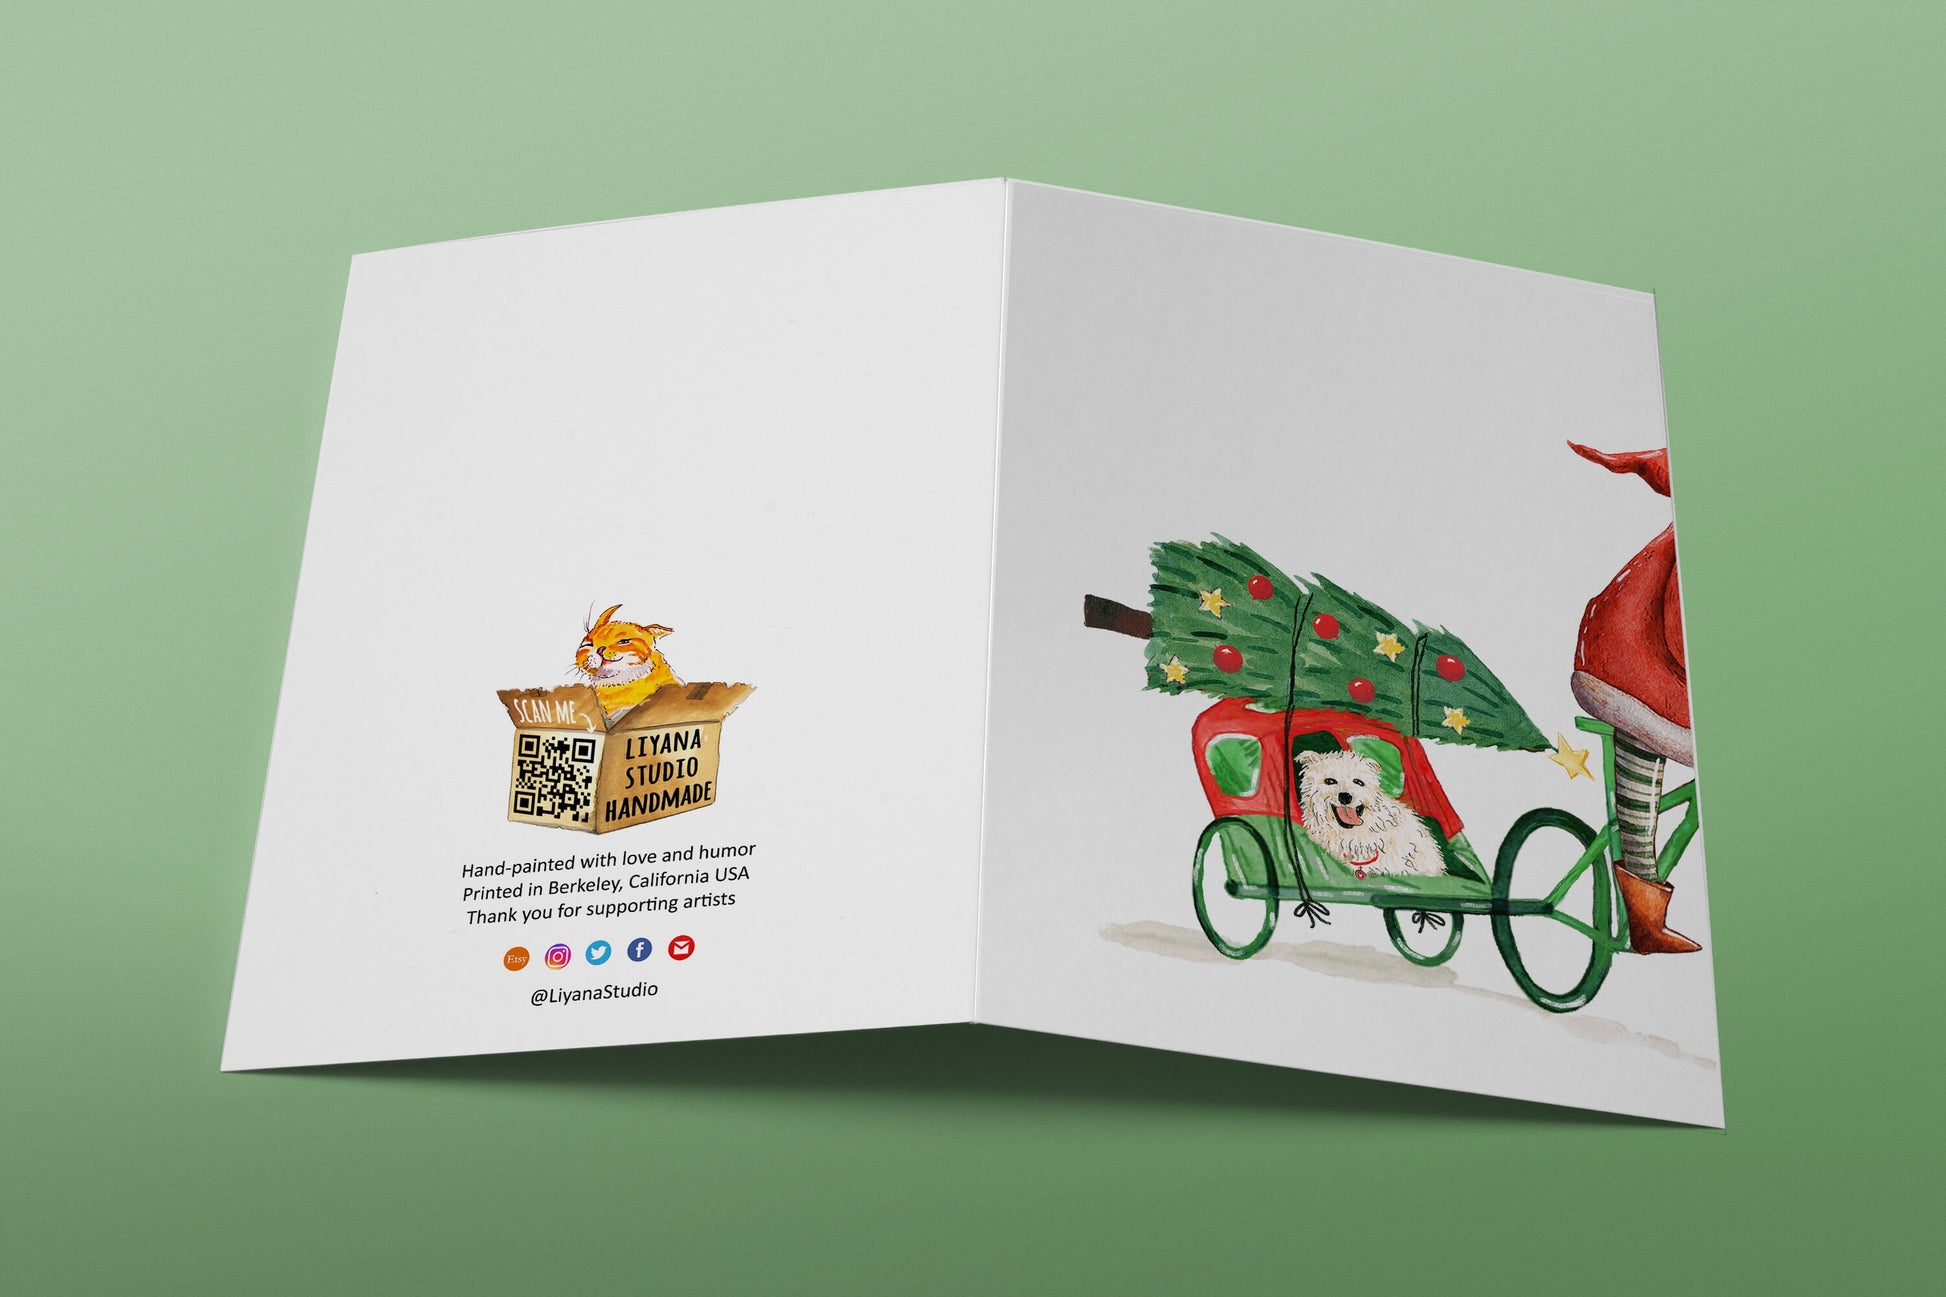 Cycling Funny Christmas Cards For Kids - Santa Claus Bike Tailer Xmas Tree - Cute White Dog Bichon Frise